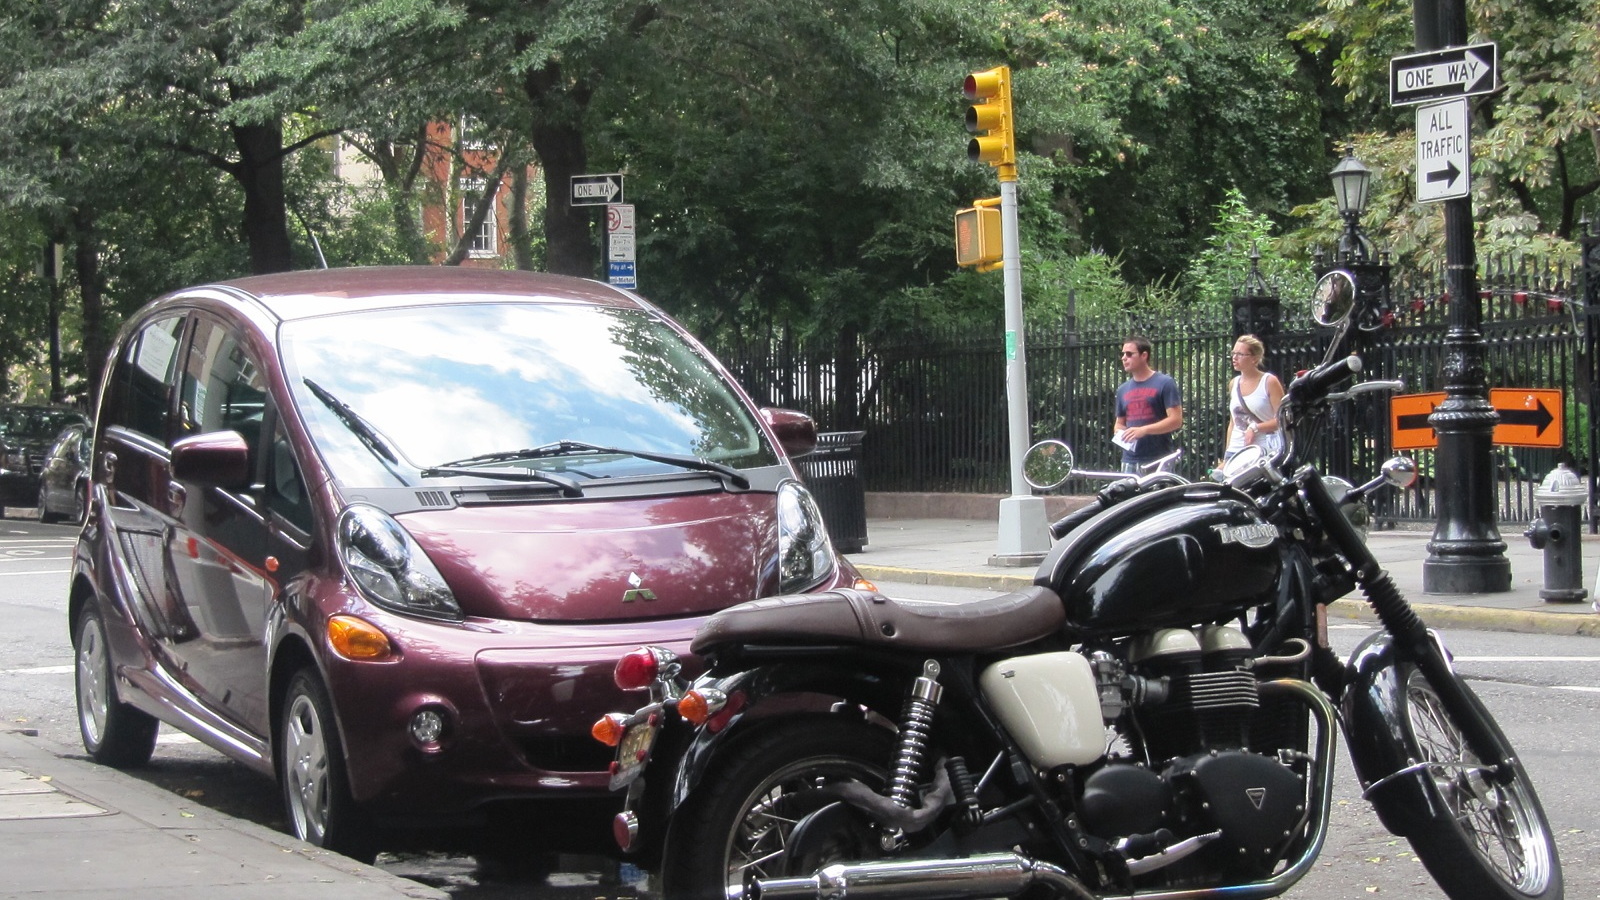 2012 Mitsubishi i electric car, New York City, August 2012